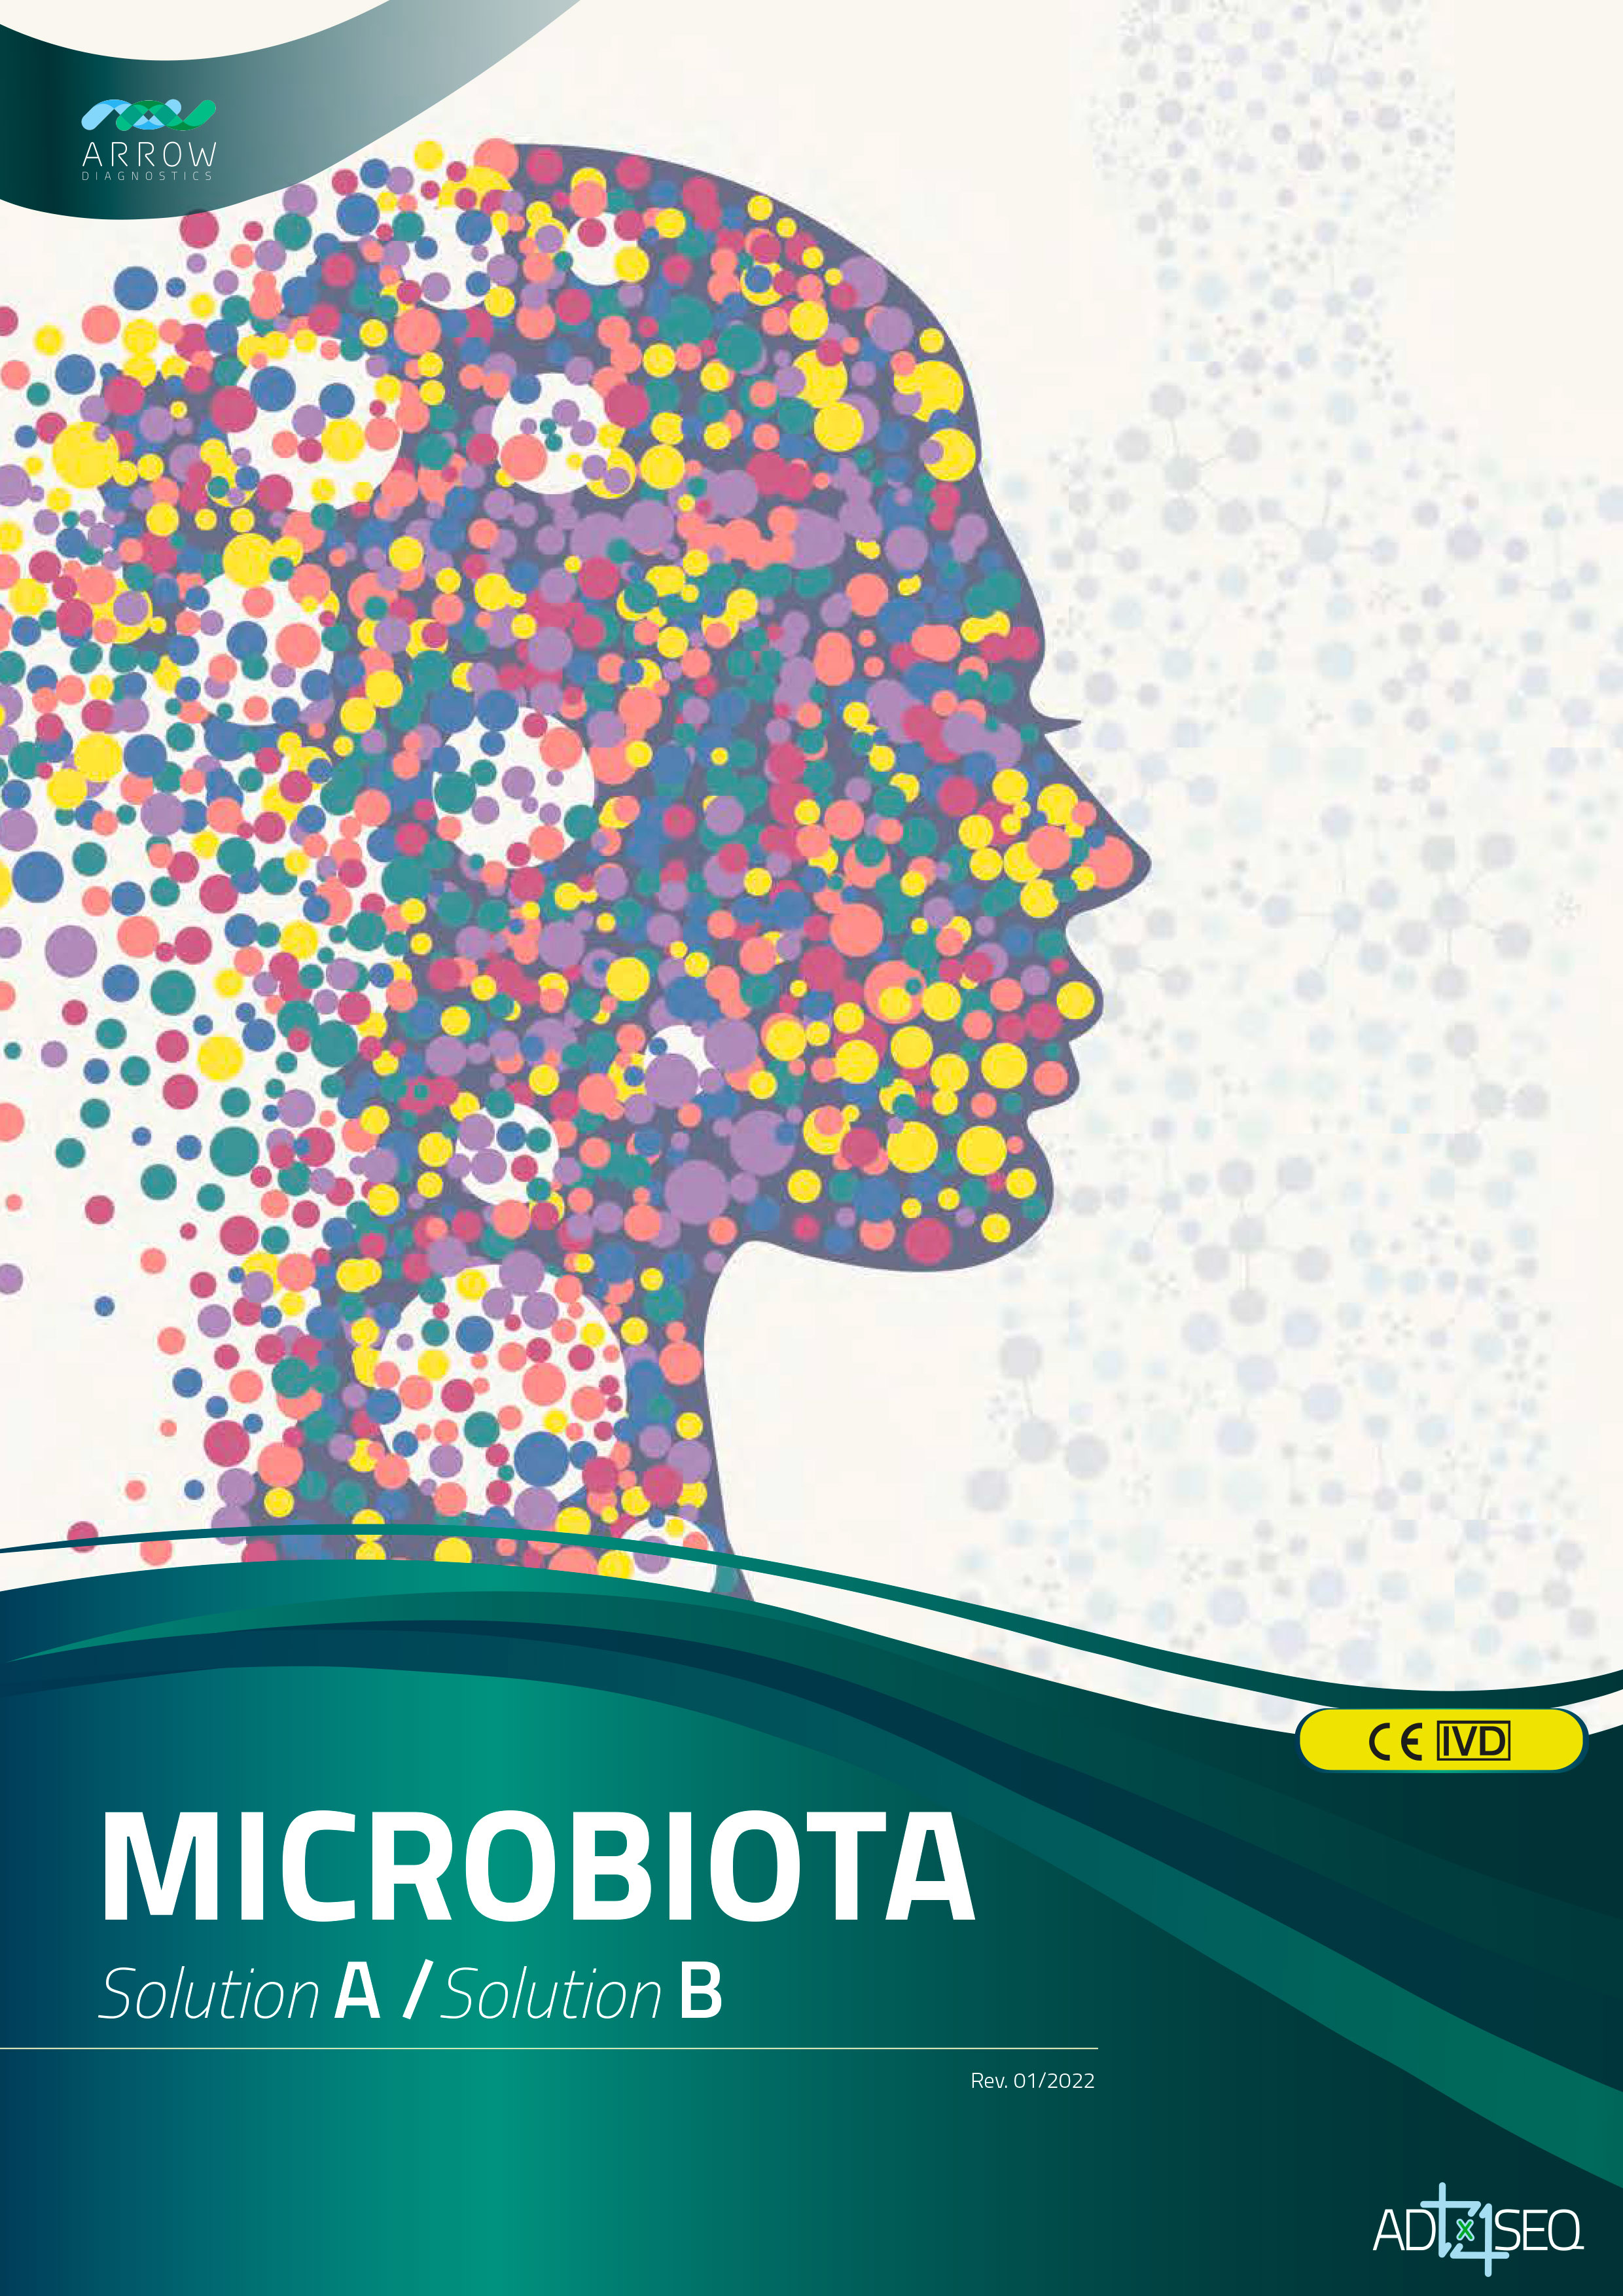 Microbiota Solution A / Microbiota Solution B